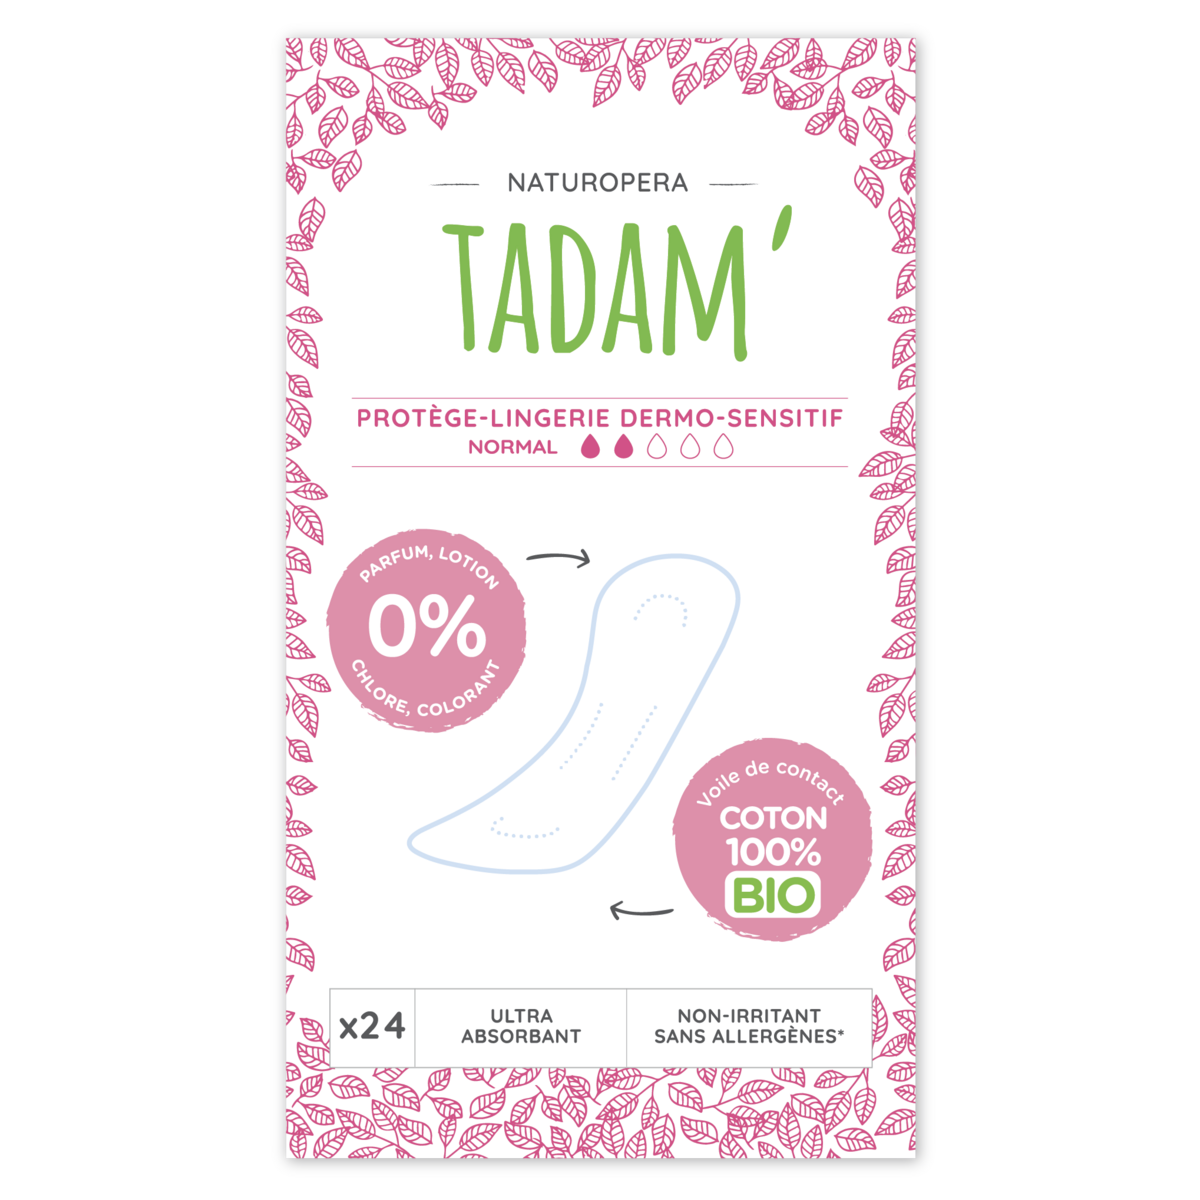 TADAM Protège-lingerie dermo-sensitif 100% coton bio normal 24 pièces